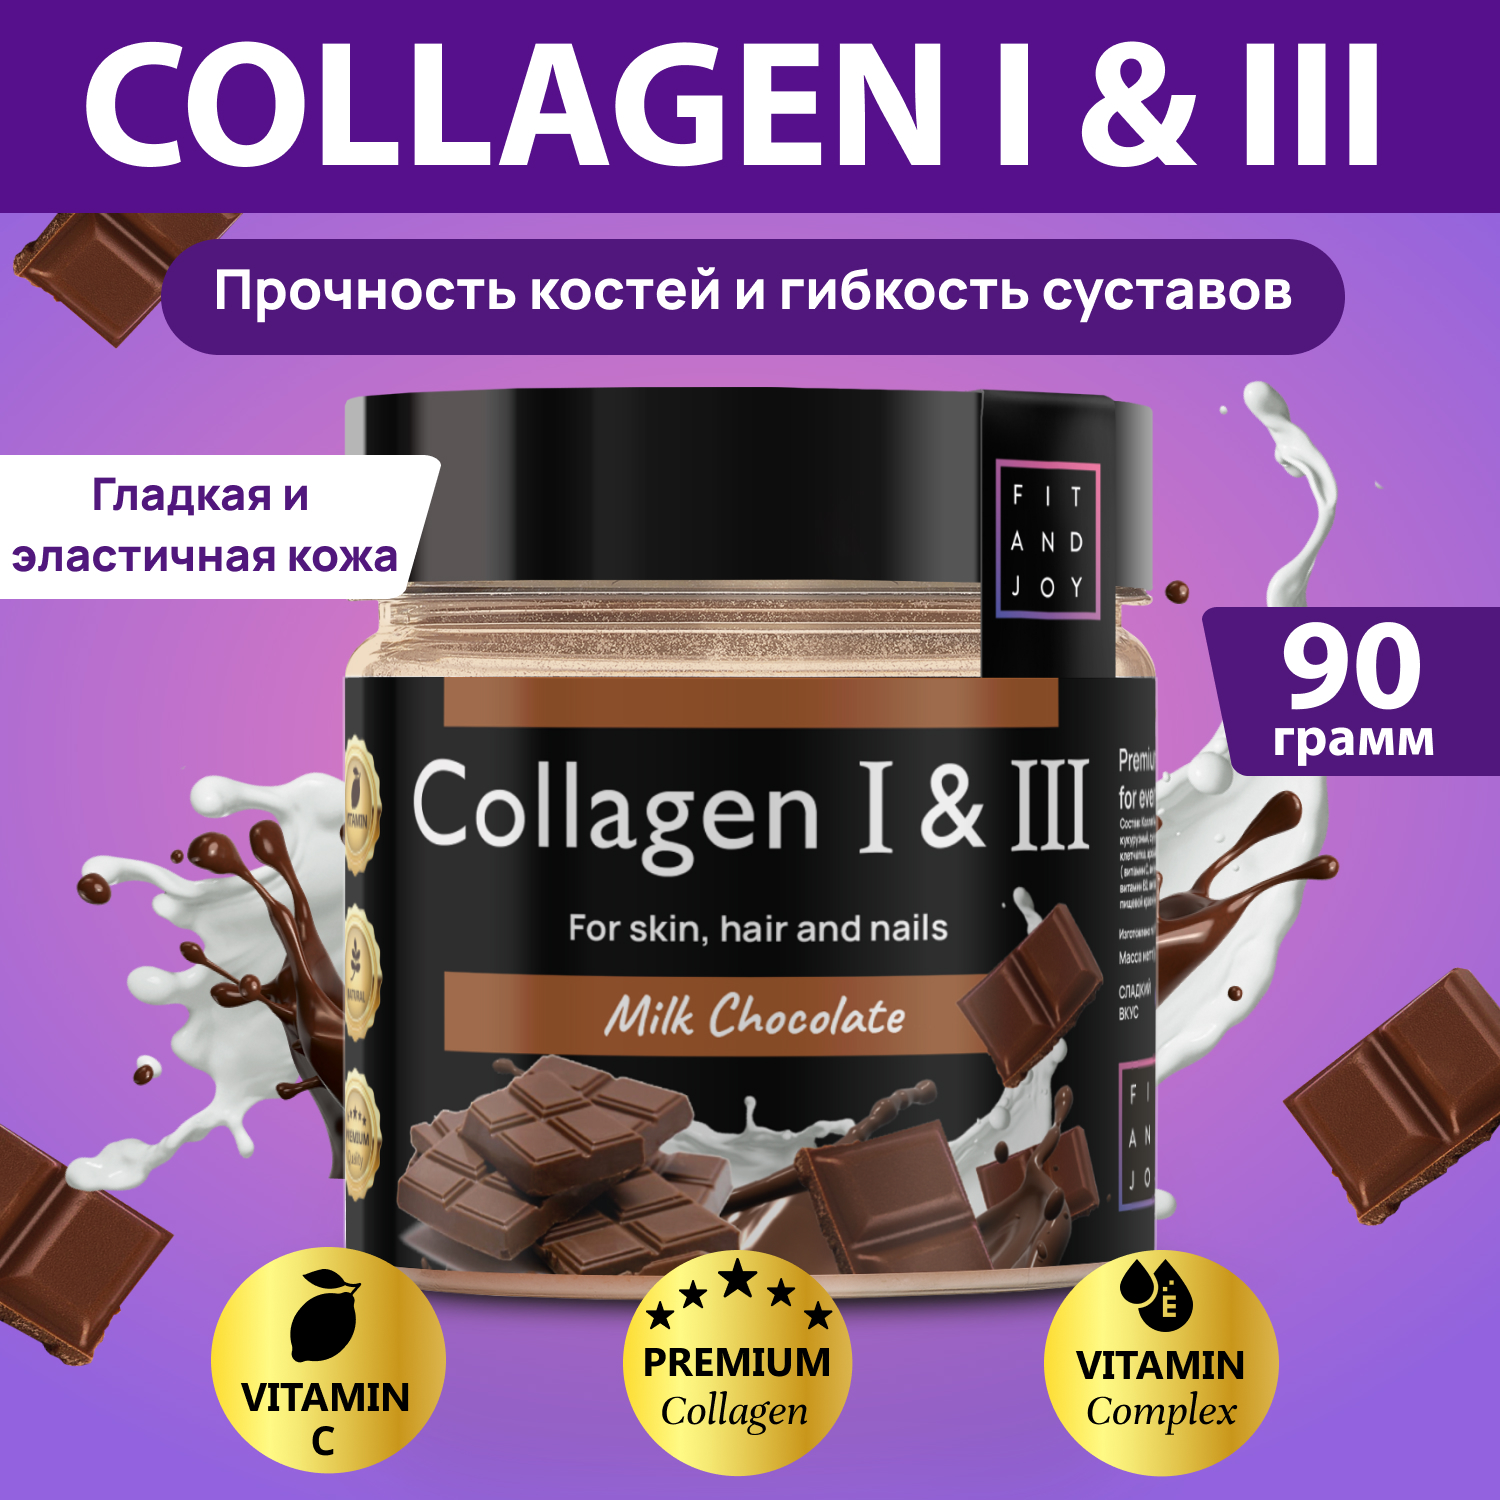 Коллаген FIT AND JOY Молочный Шоколад - фото 2